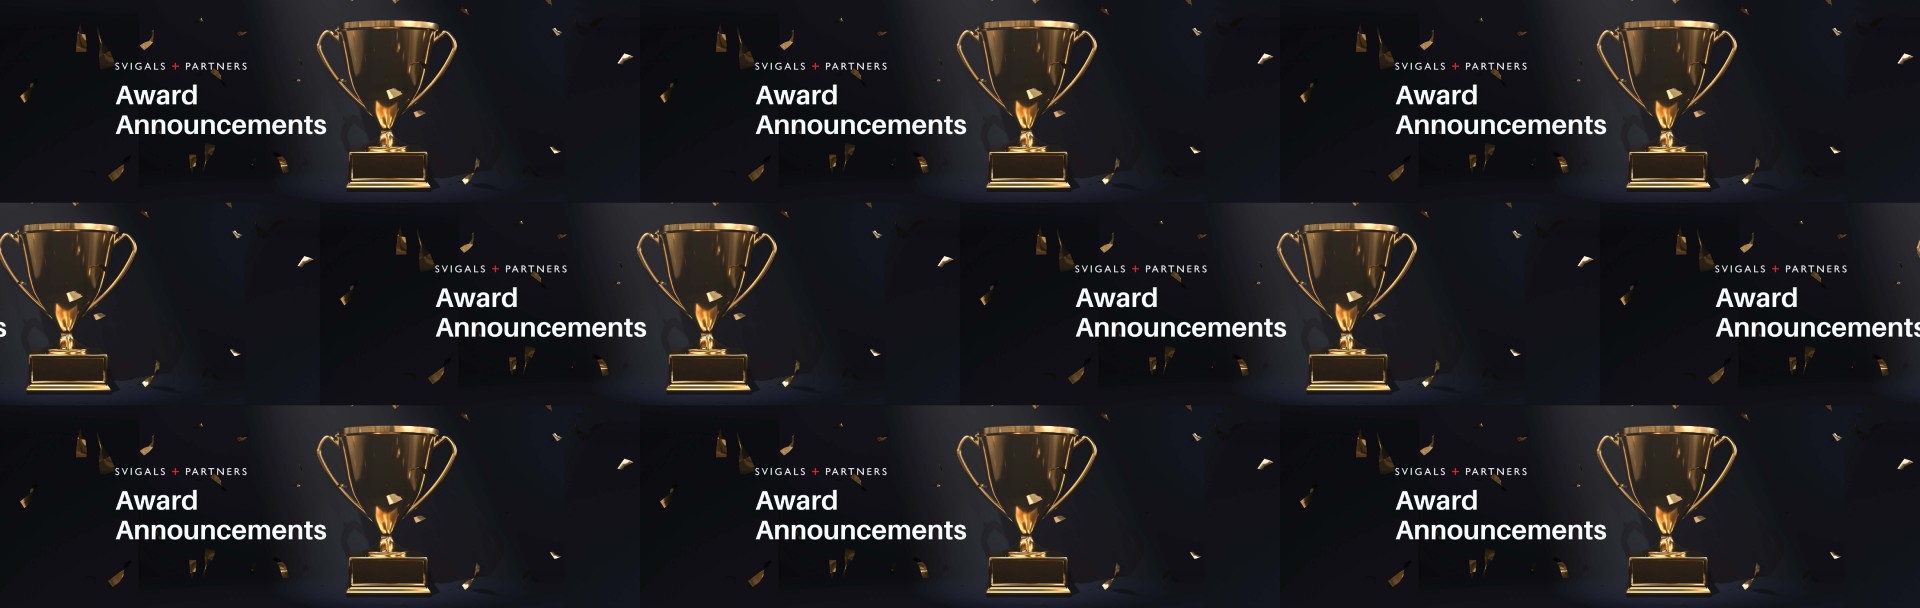 Award Announcements